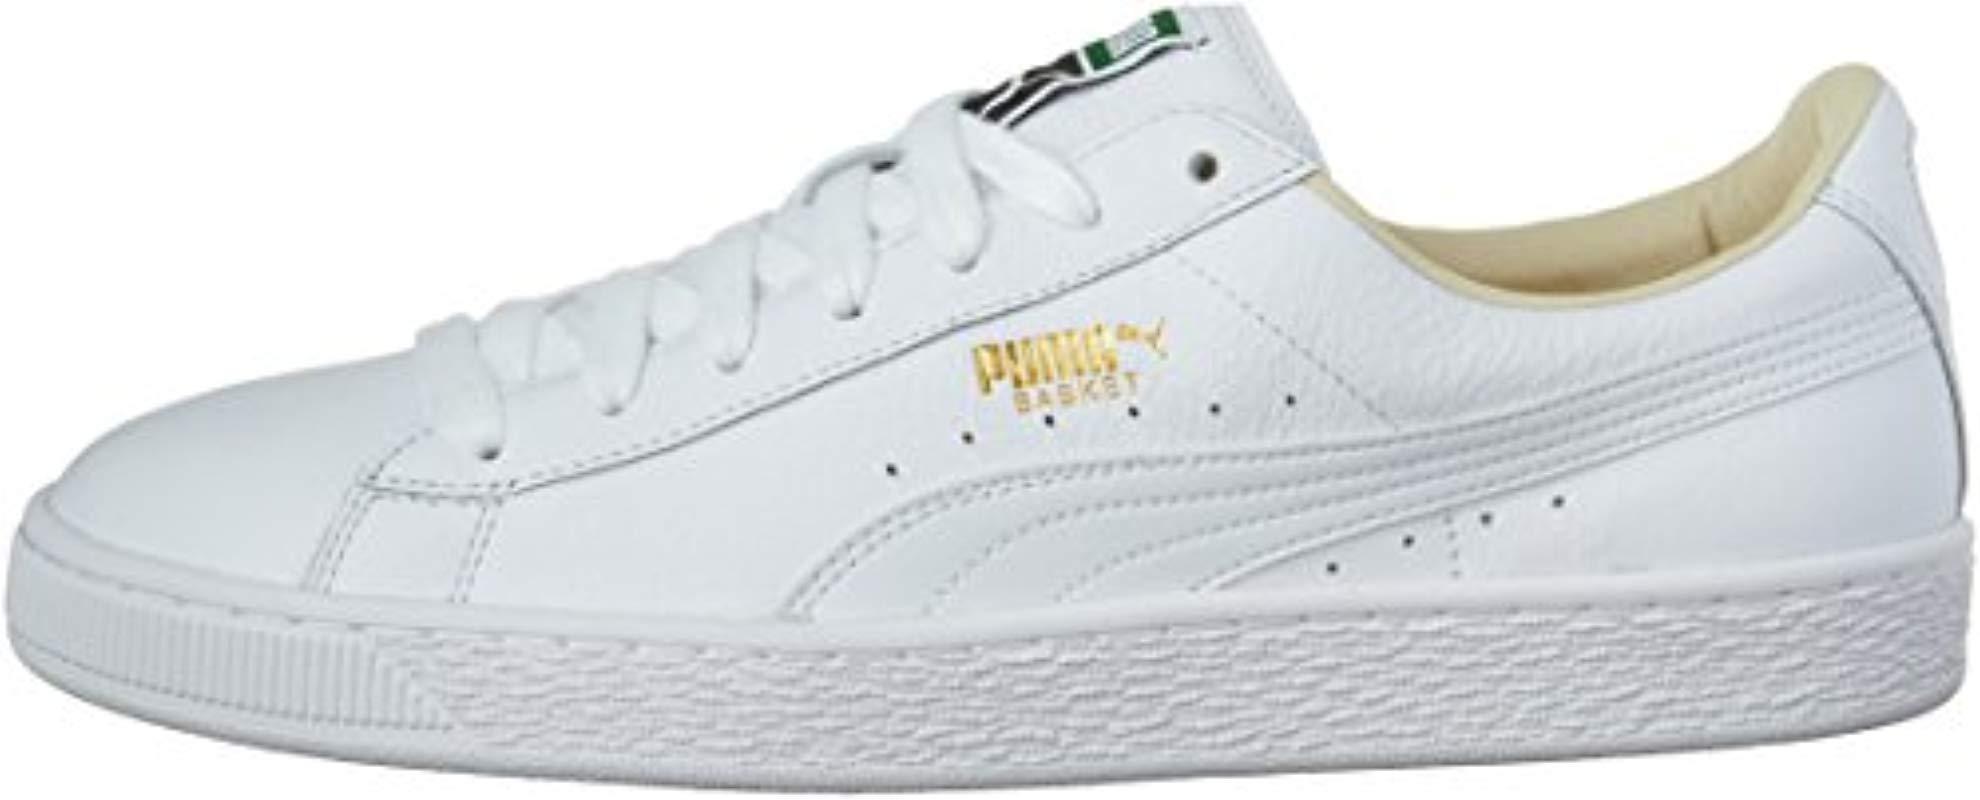 puma basket classic lfs white sneakers